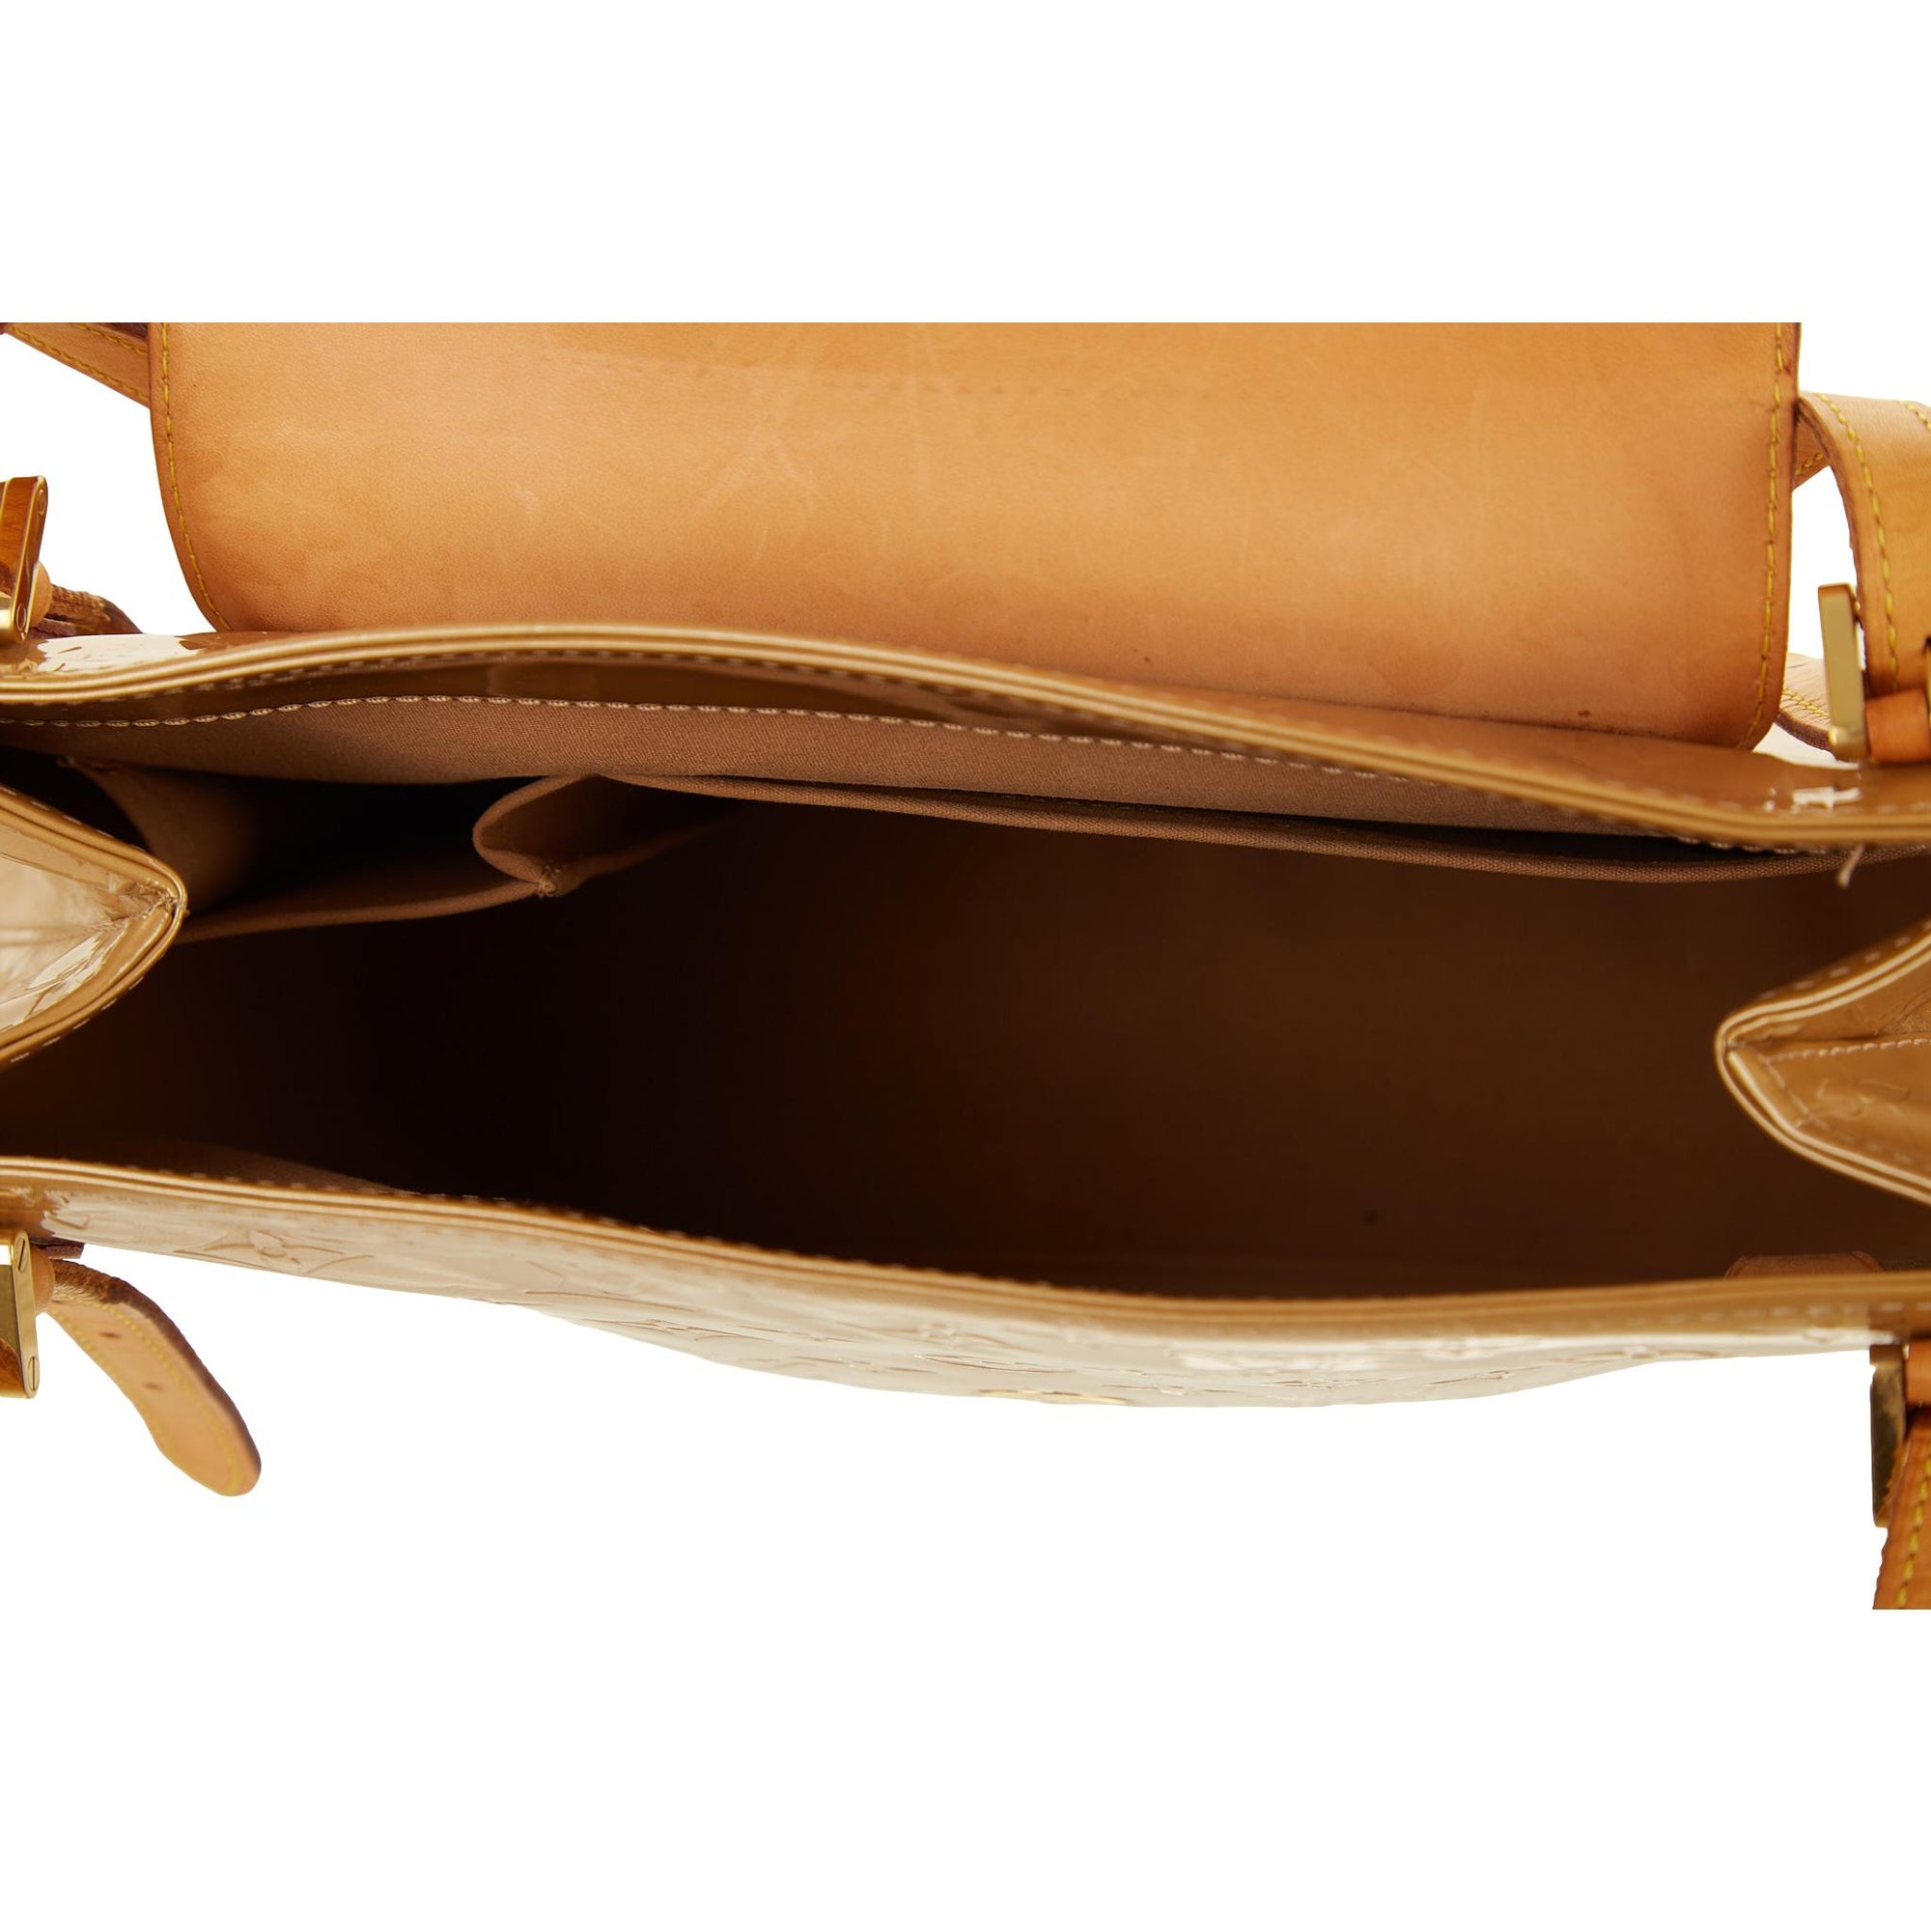 Louis Vuitton Tan Monogram Vernis Shoulder Bag